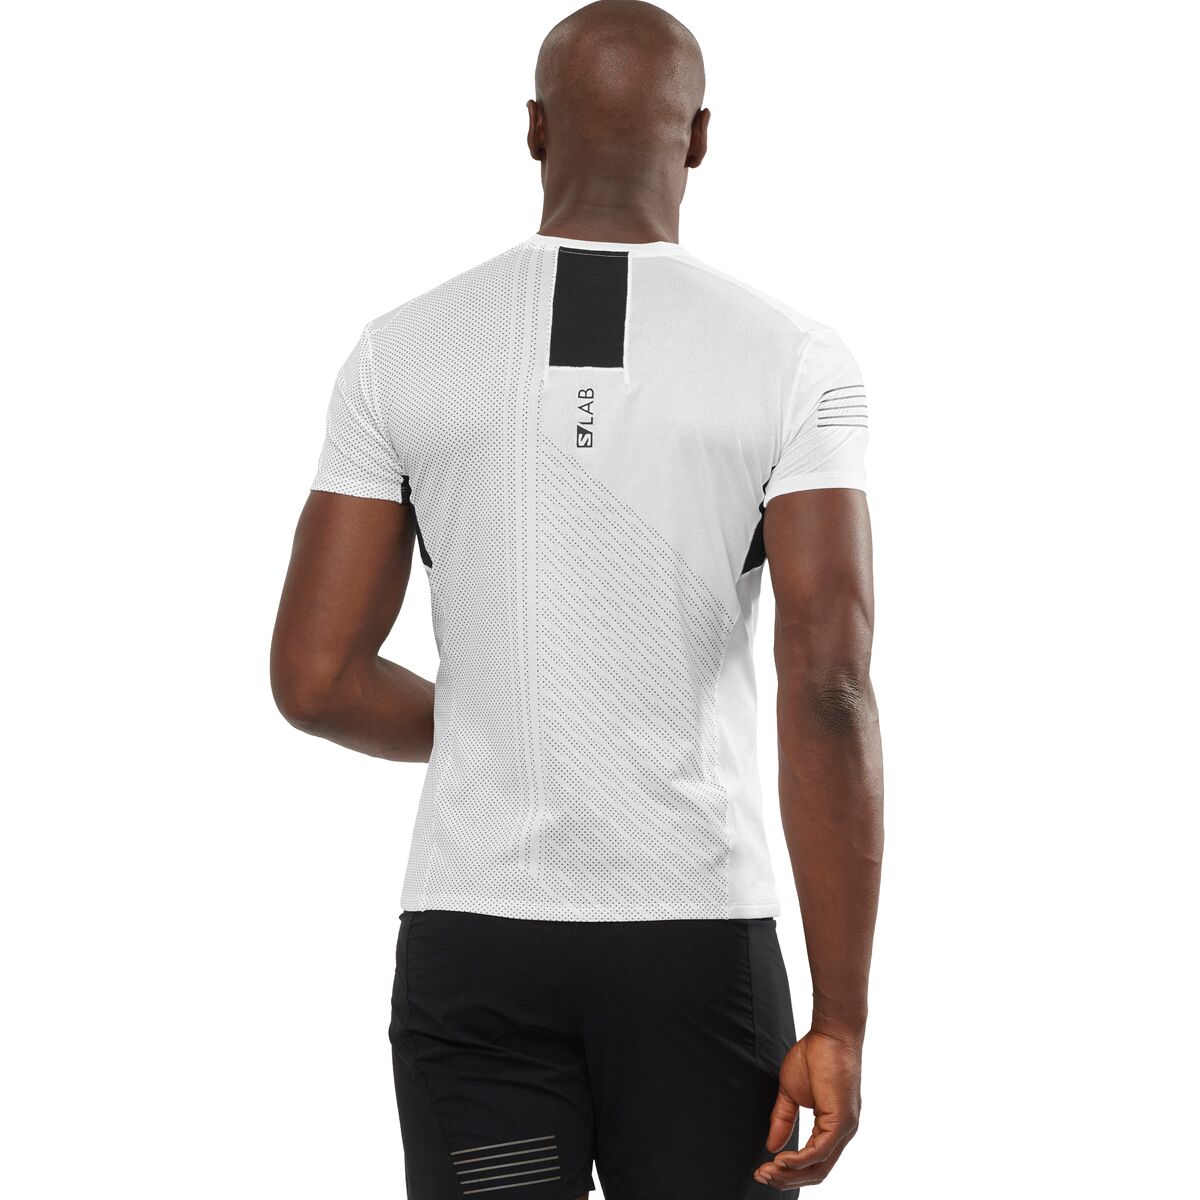 Salomon S/Lab T-Shirt - Men's Clothing